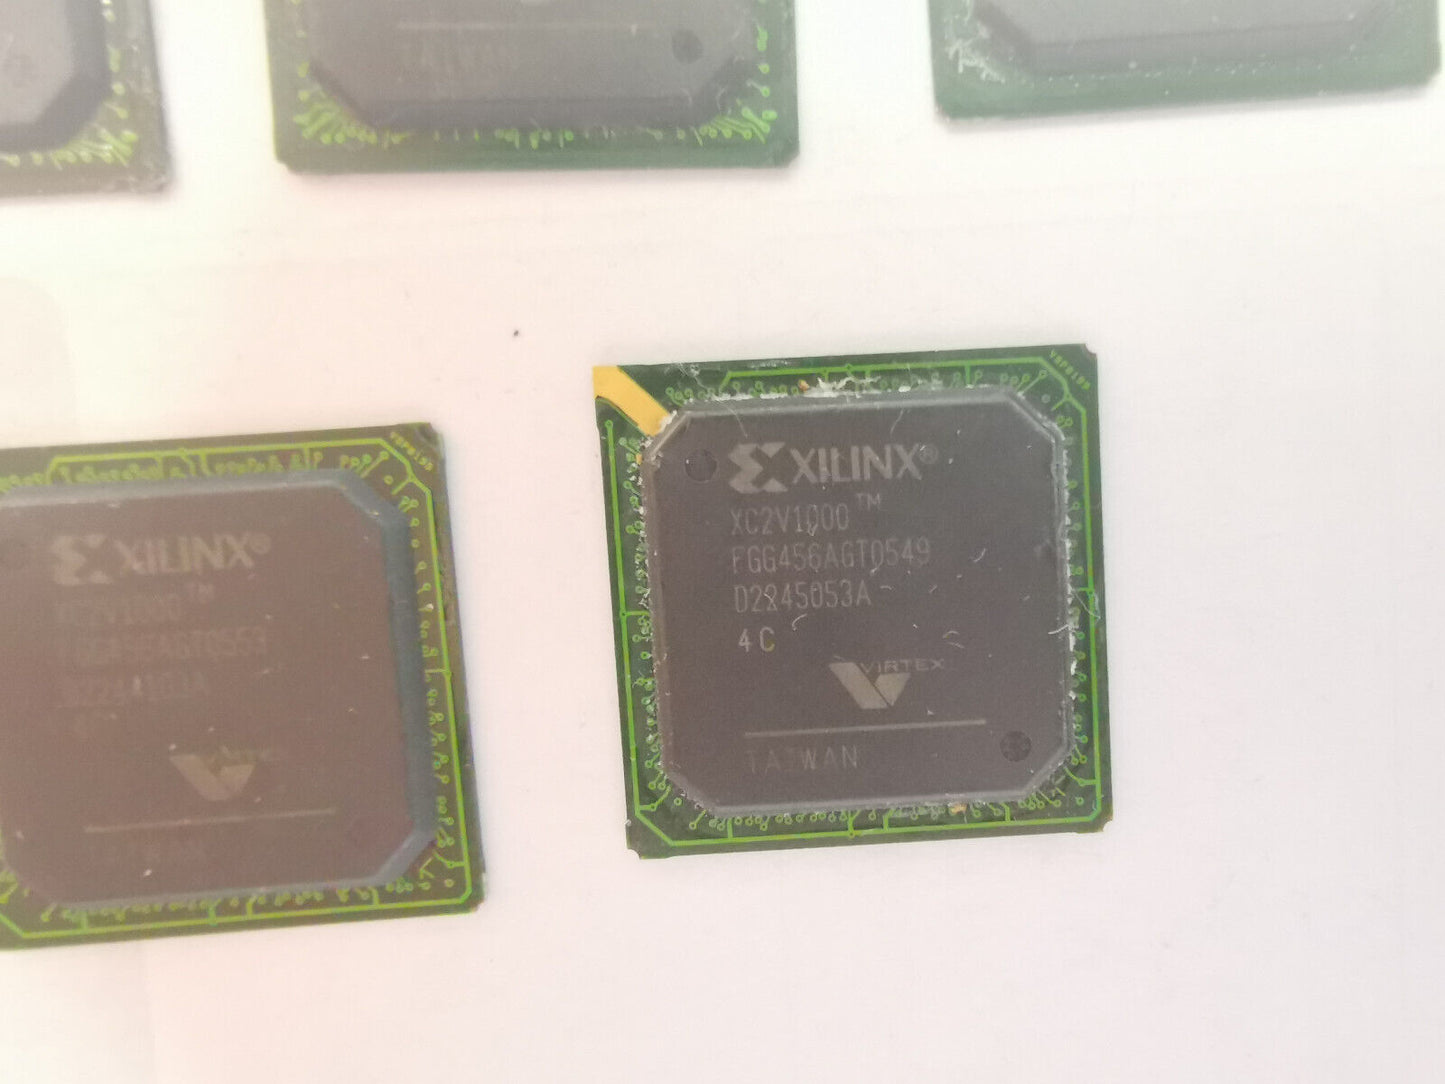 5pcs Genuine Xilinx XC2V250 FGG456AFT0649 Virtex II Platform FPGA